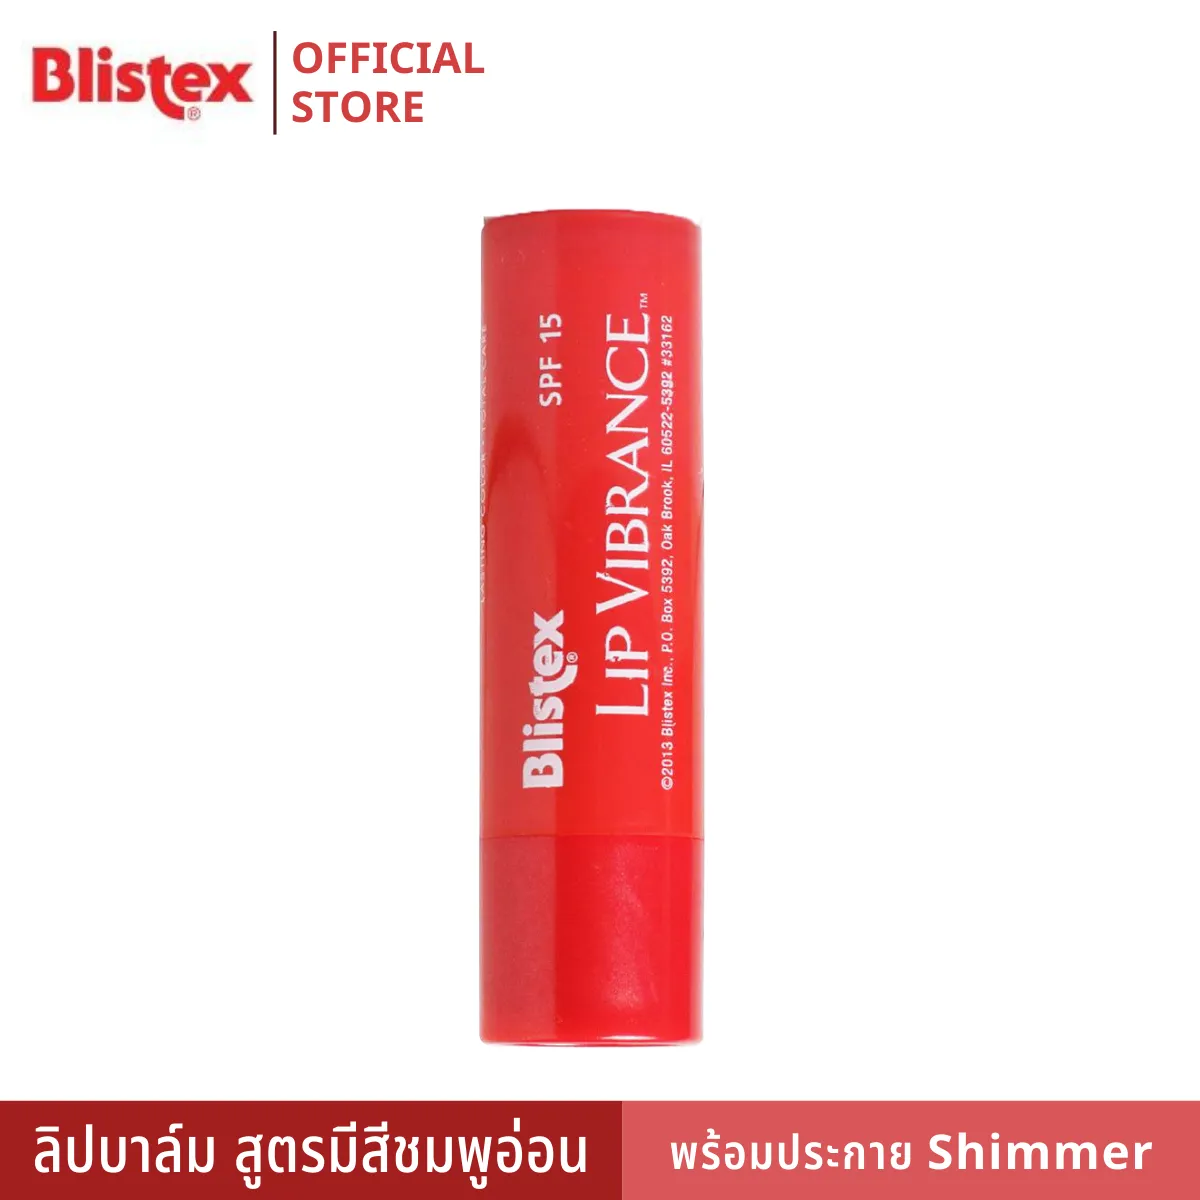 Blistex Lip Vibrance 3.69g. - บริสเทค ไวแบรนซ์  ลิปบาร์มมีสี Premium Quality From USA (ลิปบาล์ม Lip Balm ลิปมัน ลิปป้องกันปากลอก ลิปกันปากดำคล้ำ ลิปทำให้ปากอมชมพู ลิปมันเปลี่ยนสี)